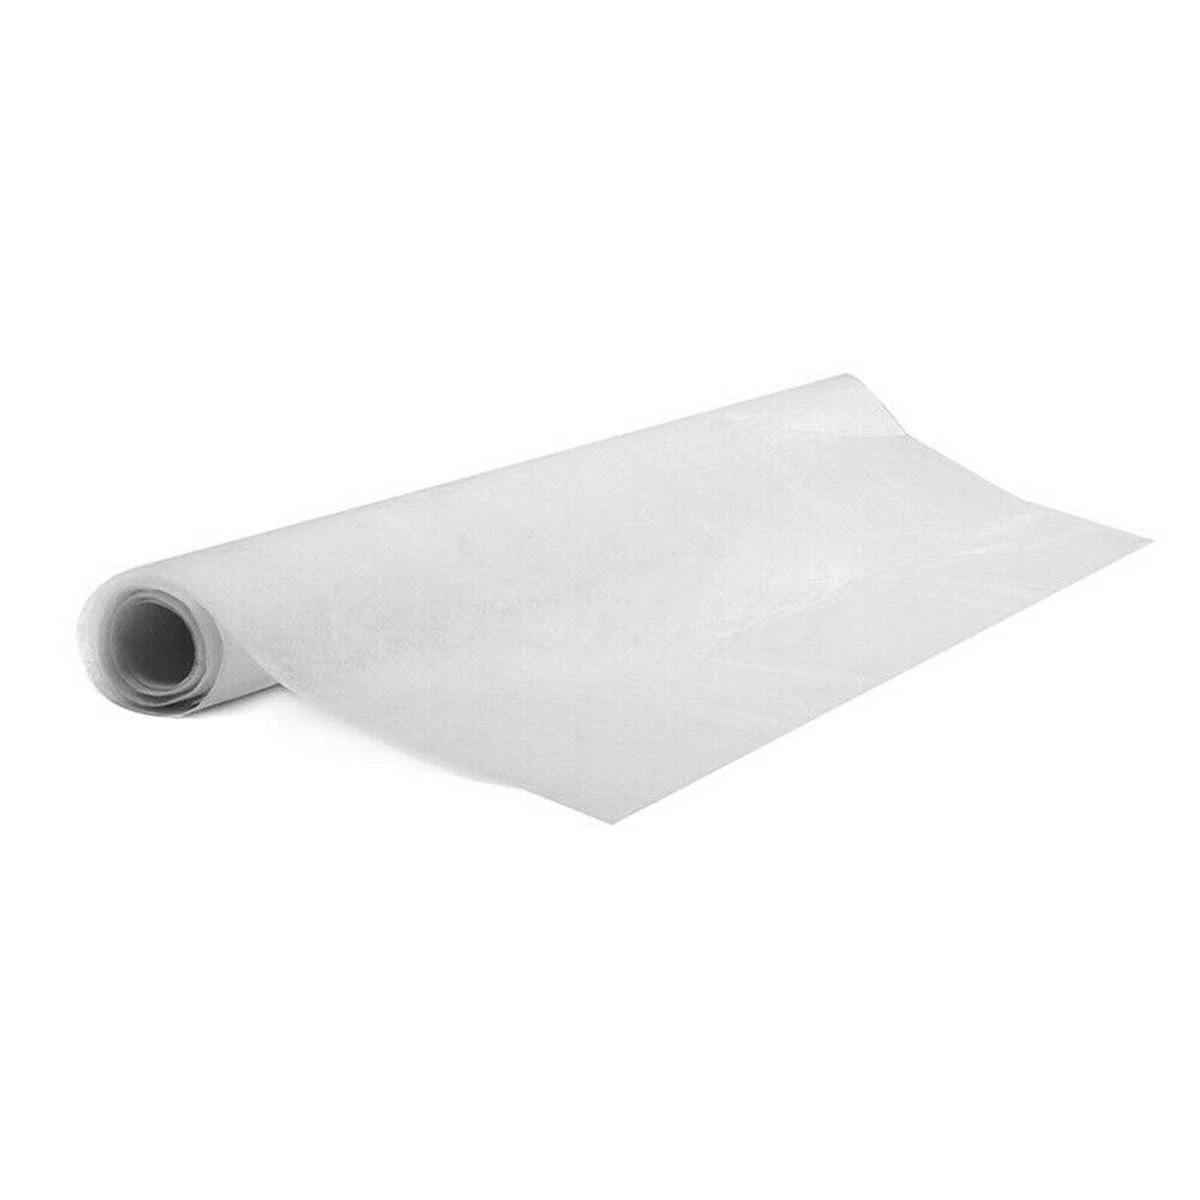 Find 6 24m Fibreglass Surface Tissue Mat Strand 30gsm Alkali free White Fiber Glass for Sale on Gipsybee.com